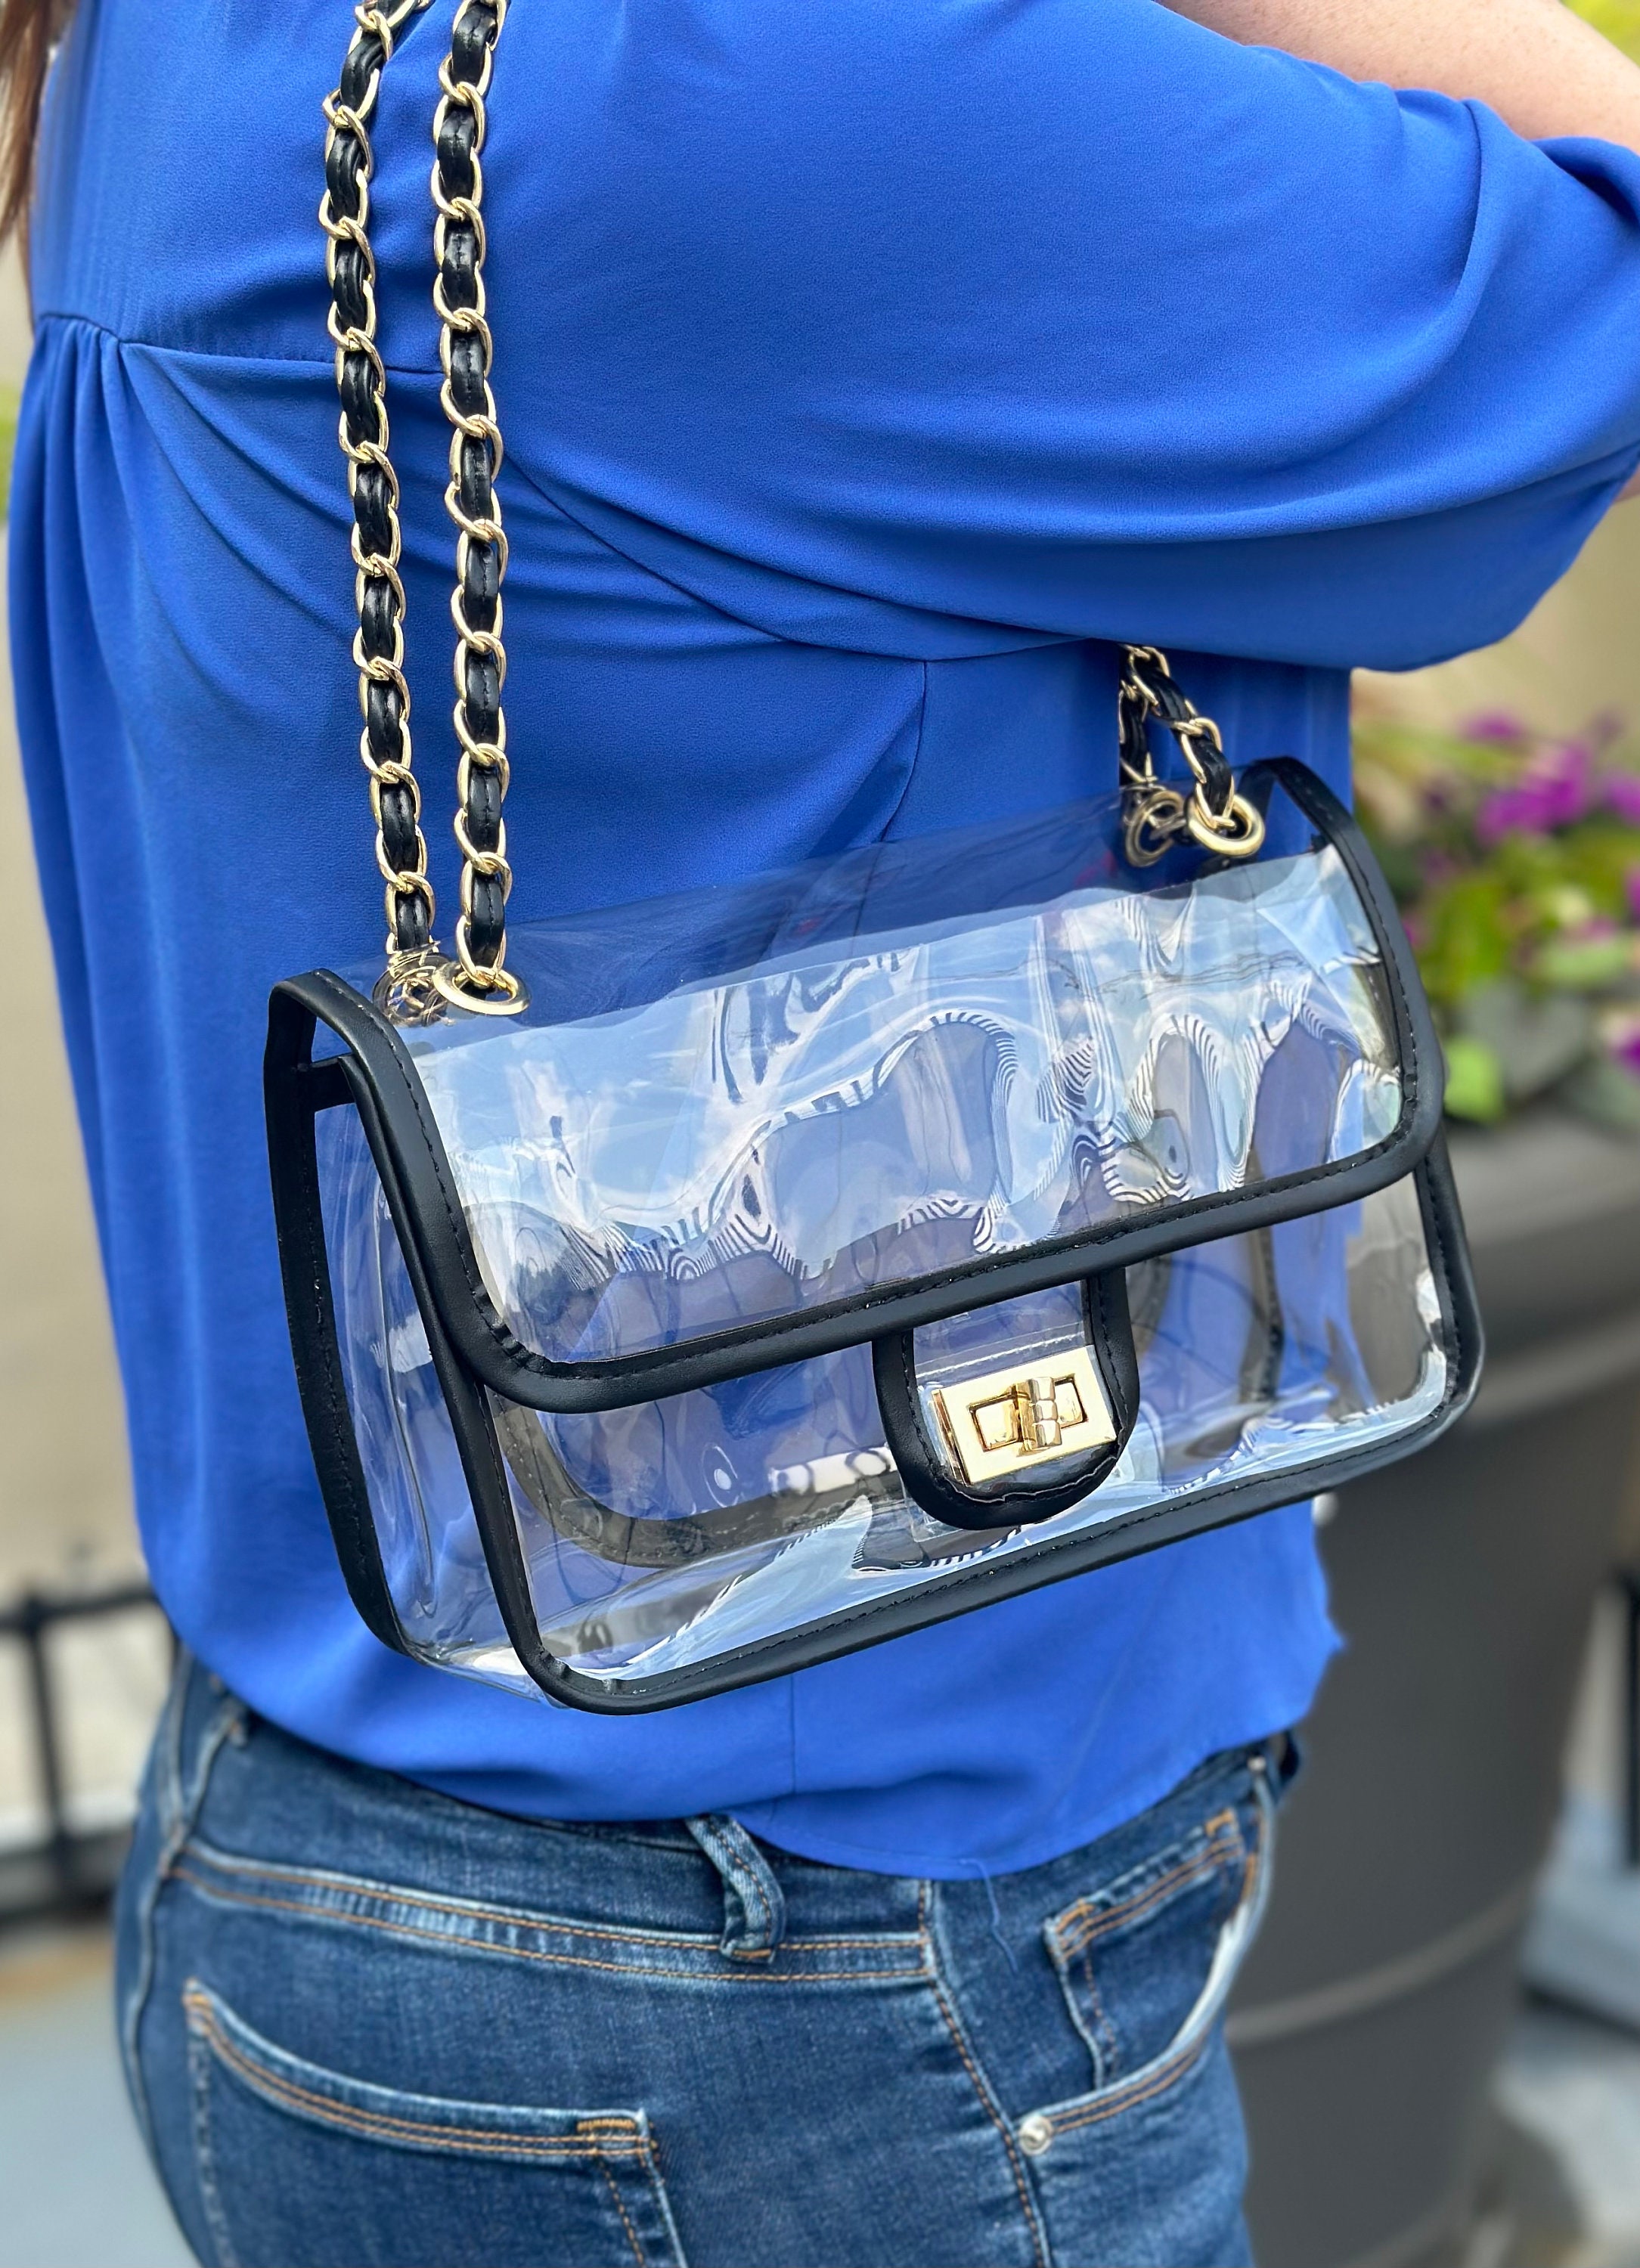 Chanel Clear Bag 